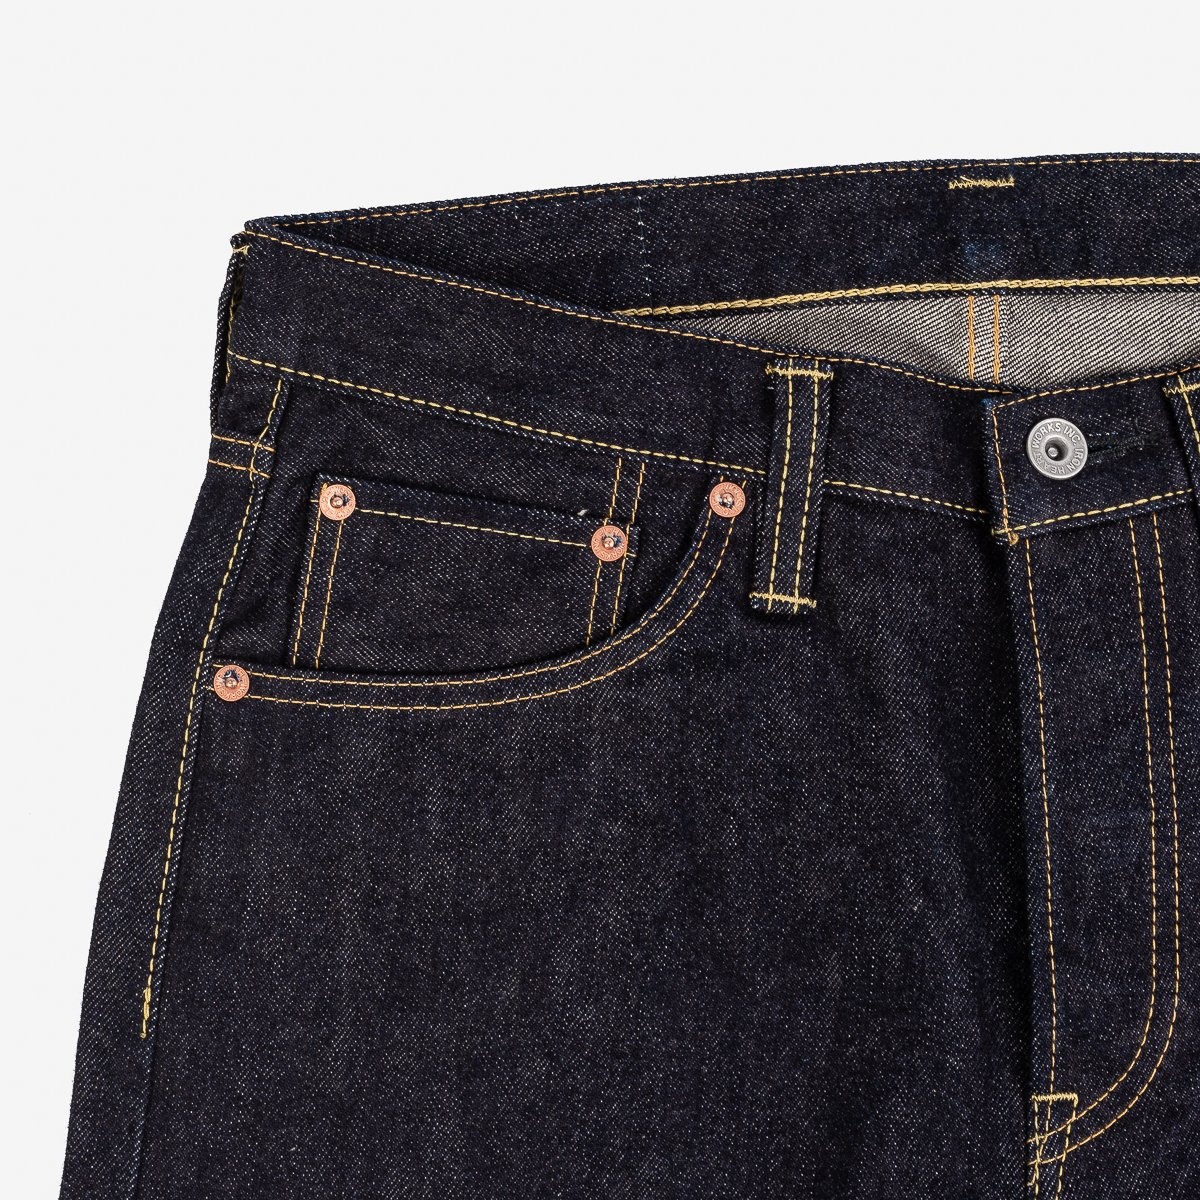 IH-666S-142 14oz Selvedge Denim Slim Straight Cut Jeans - Indigo - 6